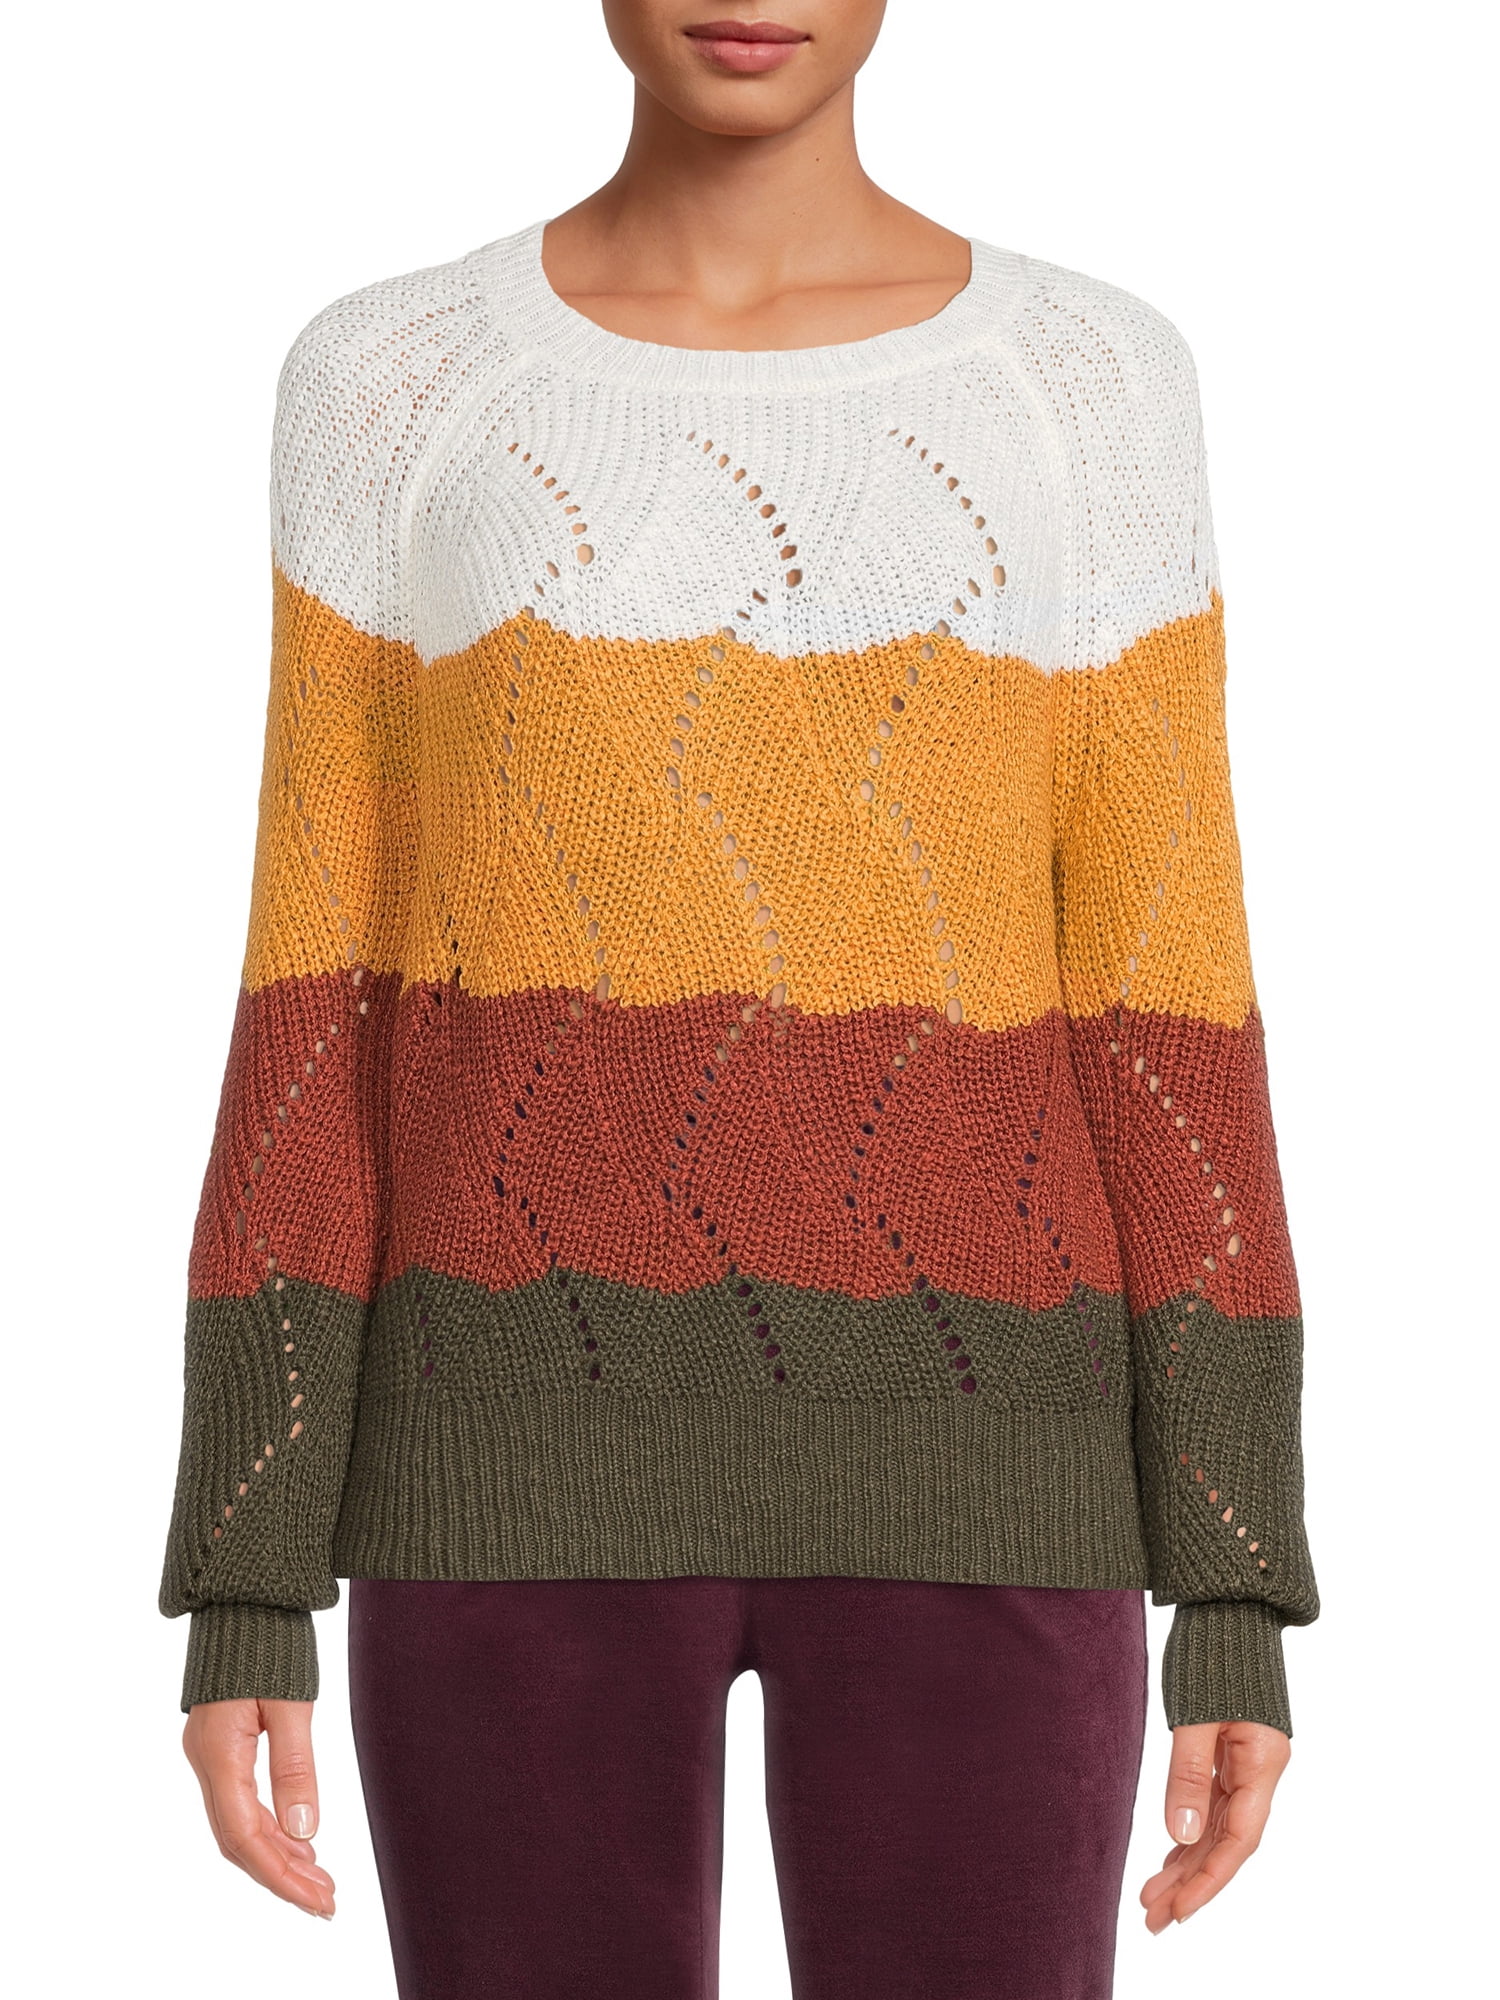 Orangeskycn Plus Size Womens Soild Irregular Hem Knitting Long Sweater Blouse